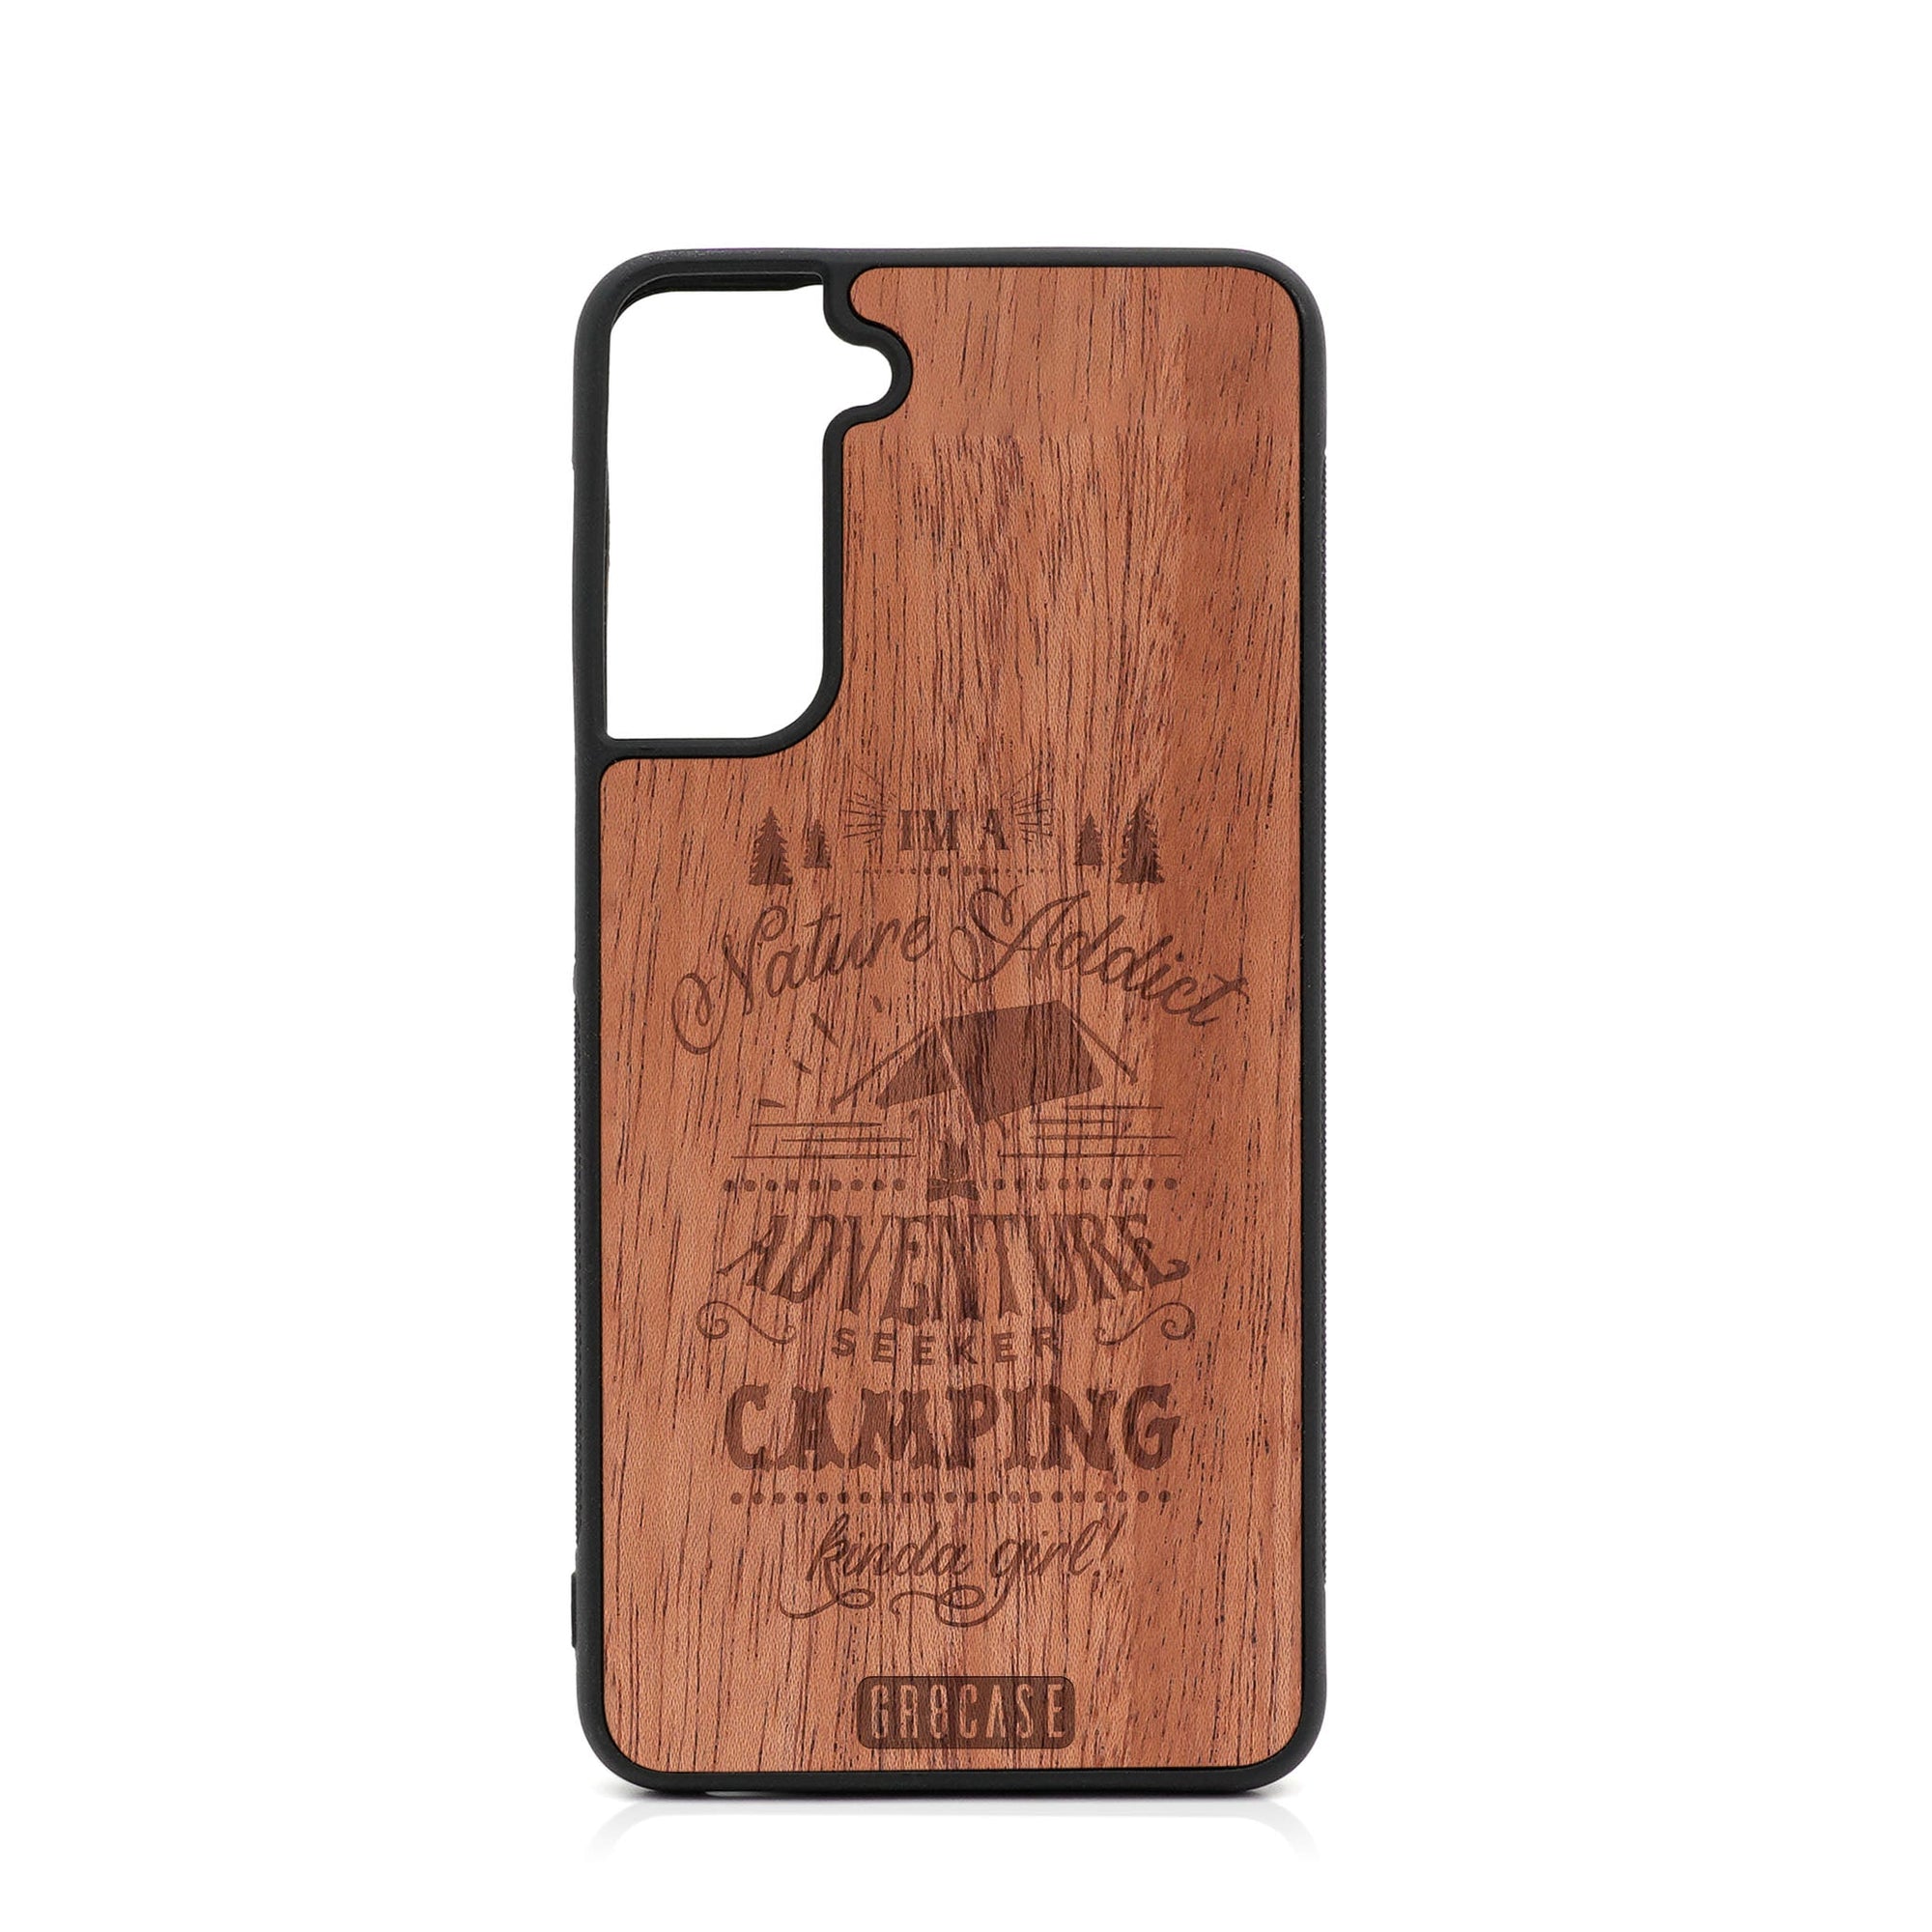 I'm A Nature Addict Adventure Seeker Camping Kinda Girl Design Wood Case For Samsung Galaxy S22 Plus